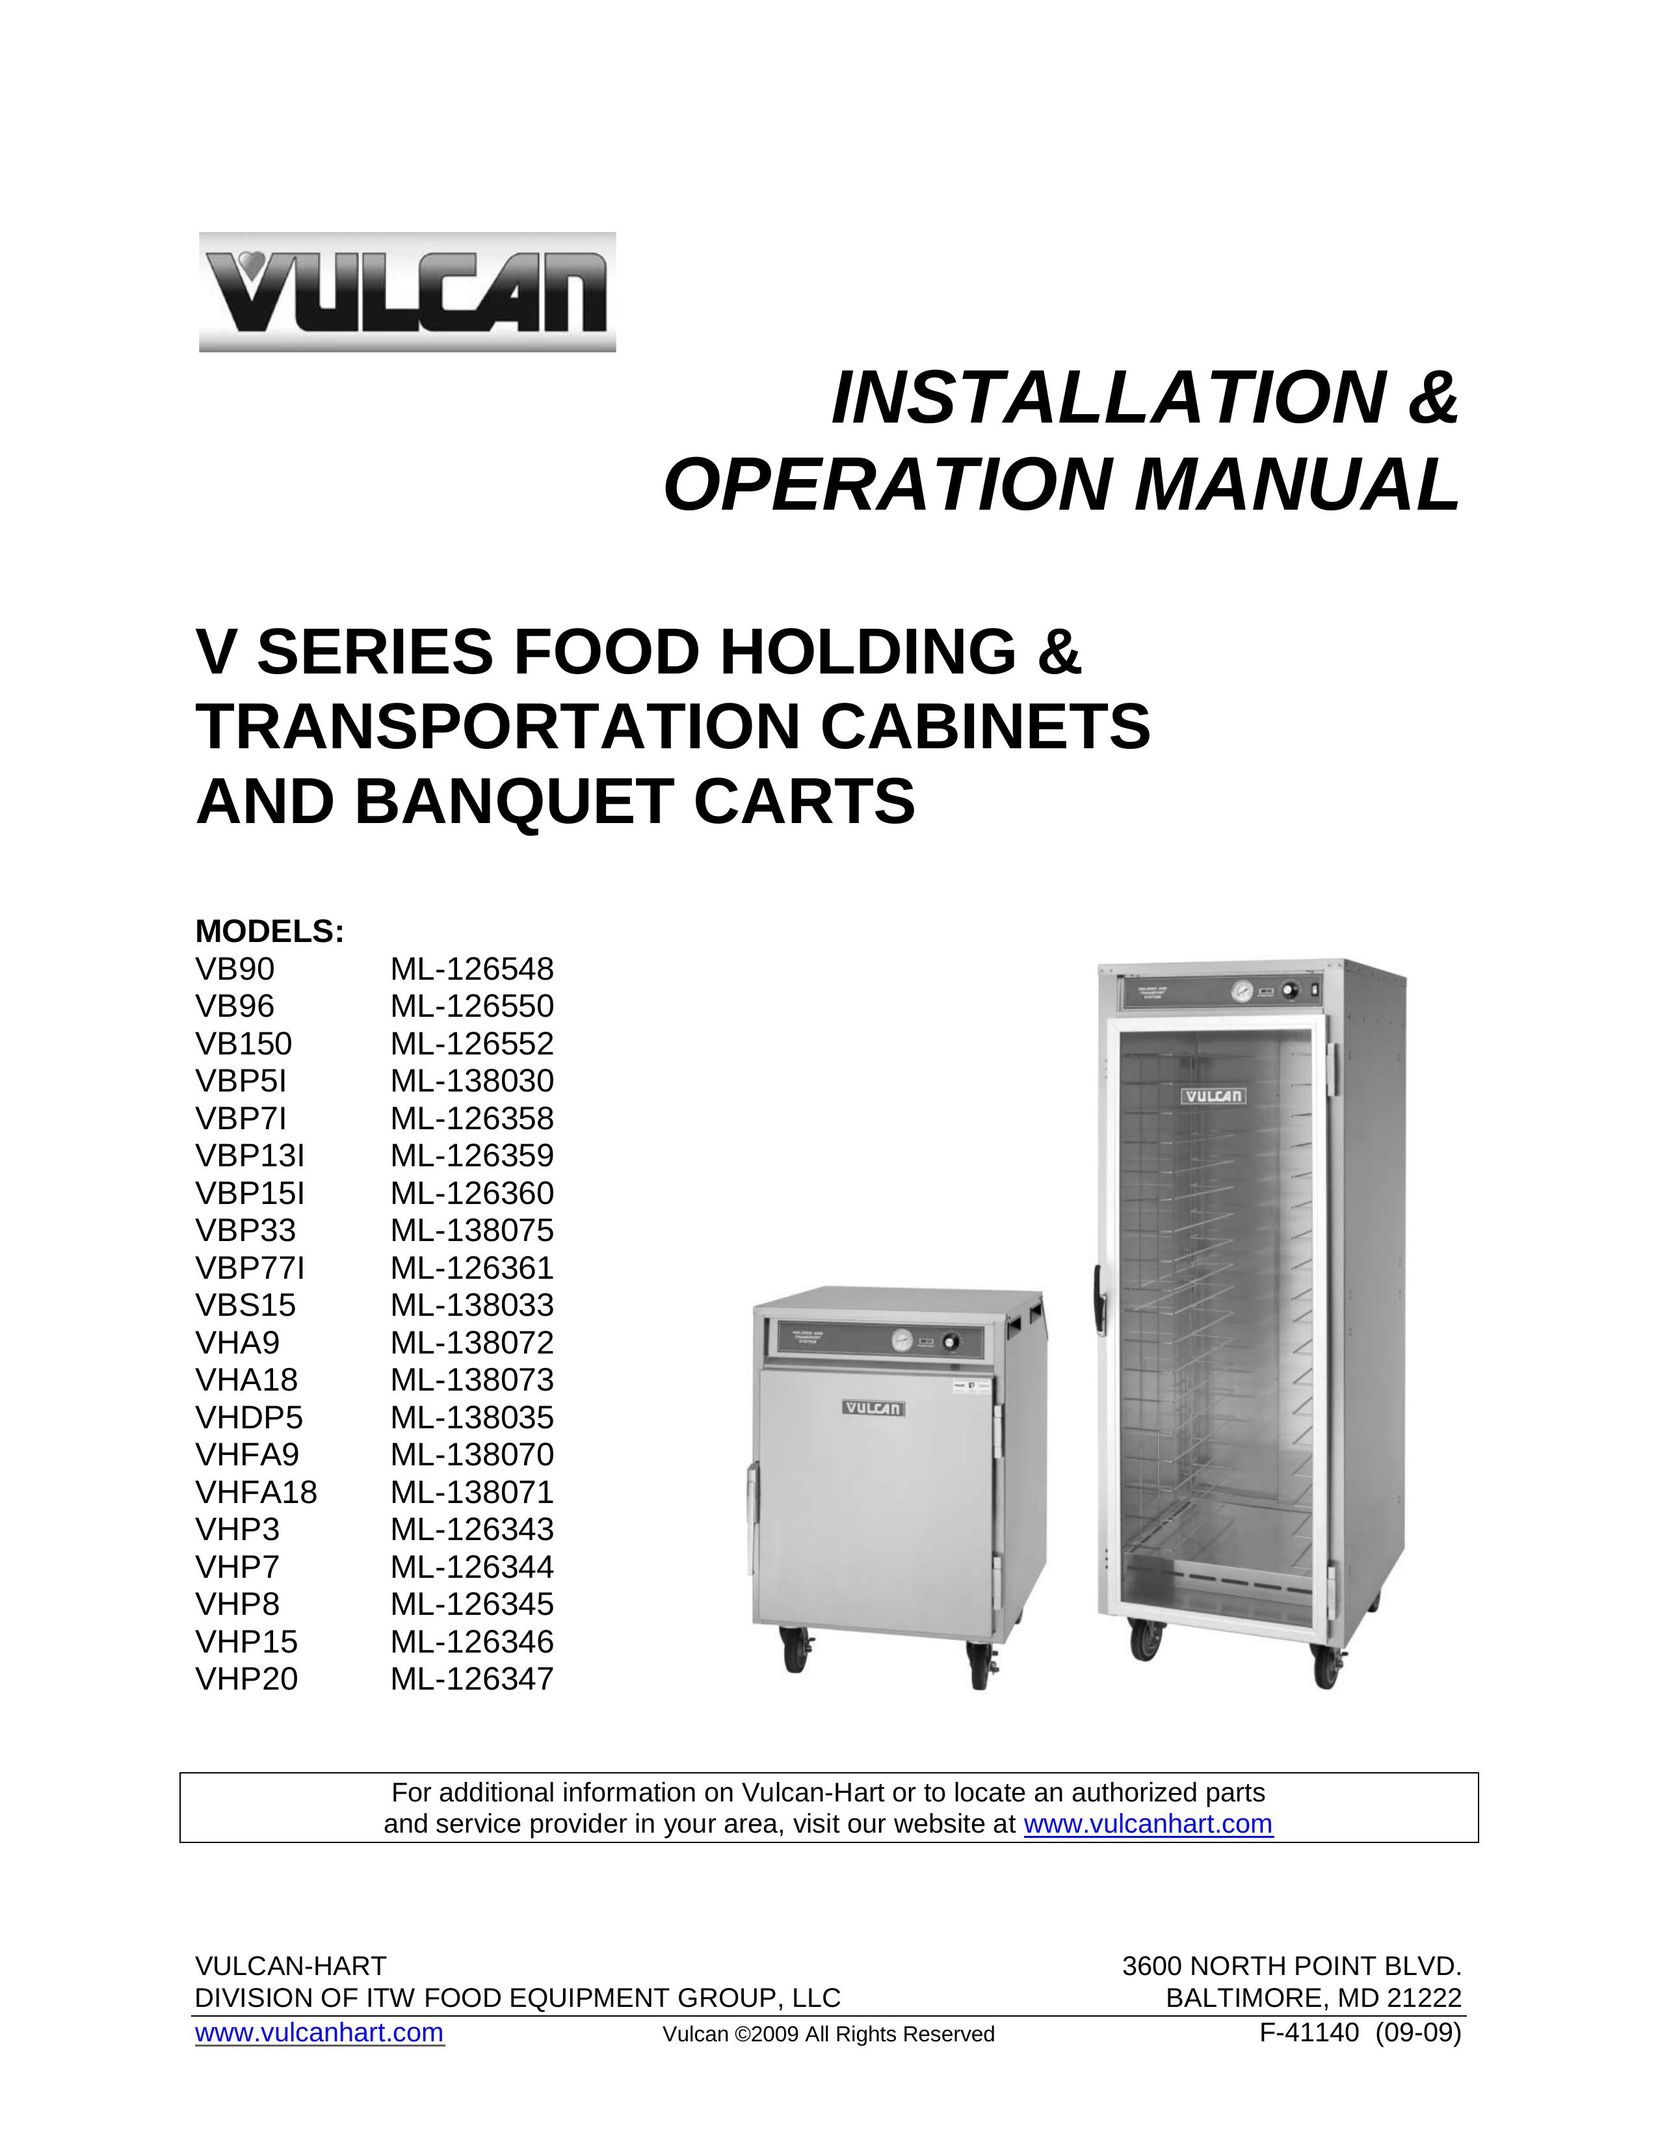 Vulcan-Hart VBP33 ML-138075 Food Warmer User Manual